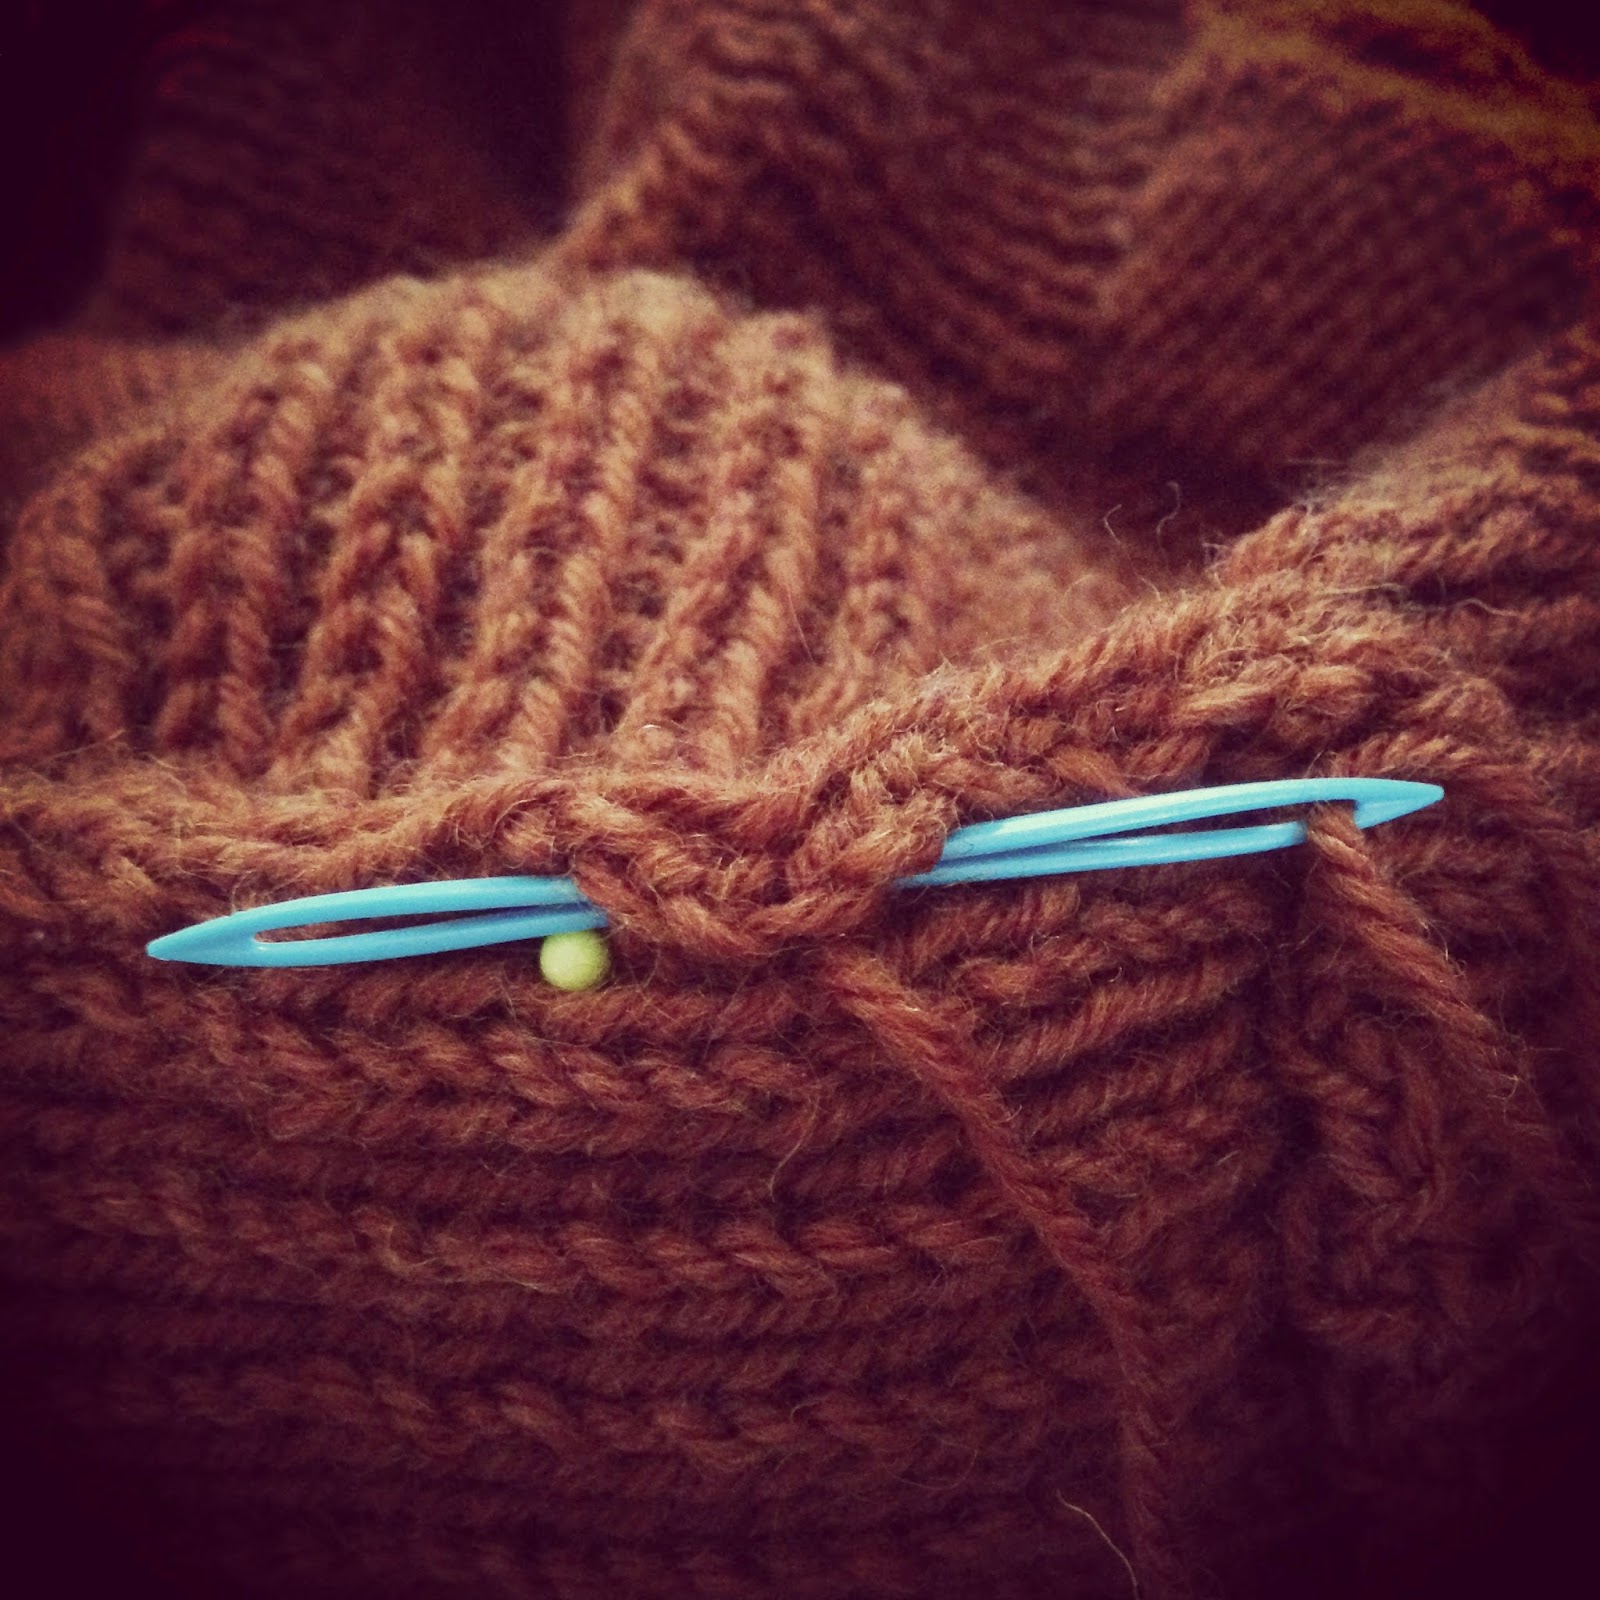 Eliza-Beth's Textile Arts & Crafts: 'Susan Bates' Finishing Needles